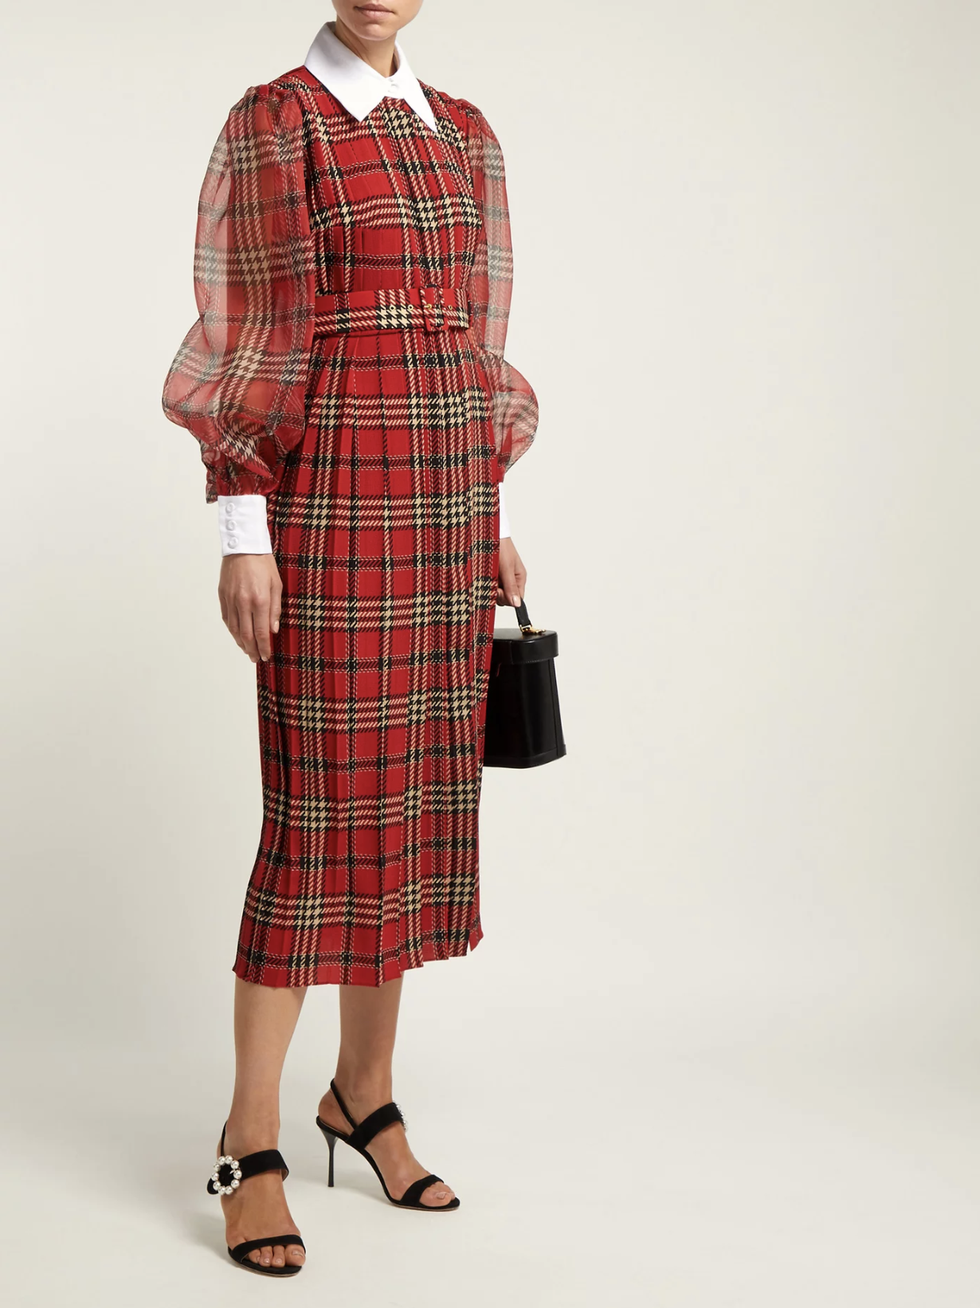 Stampa scozzese 2019, moda donna 2019, tendenza tartan, stampa check